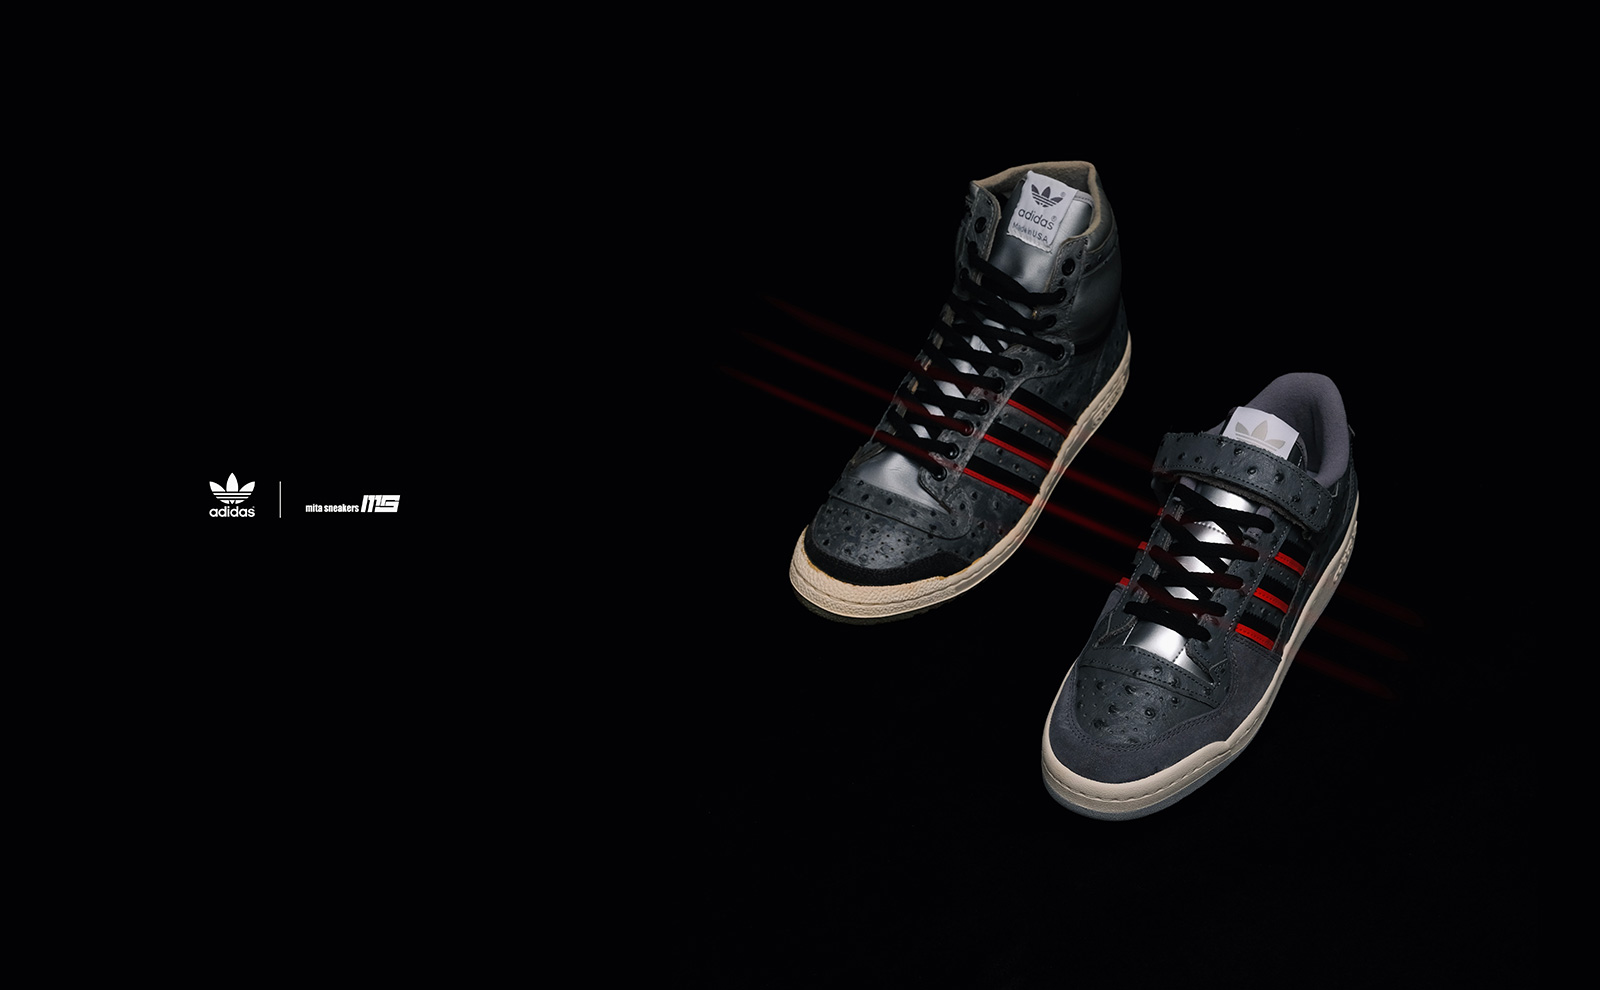 adidas アディダス mita sneakers FORUM 84 LOW MITA ASK (GW3451) 22SS ミタスニーカーズ フォーラム84 ロー グレーUS8.5 26.5 cm スニーカー コラボ 【メンズ】【R020】